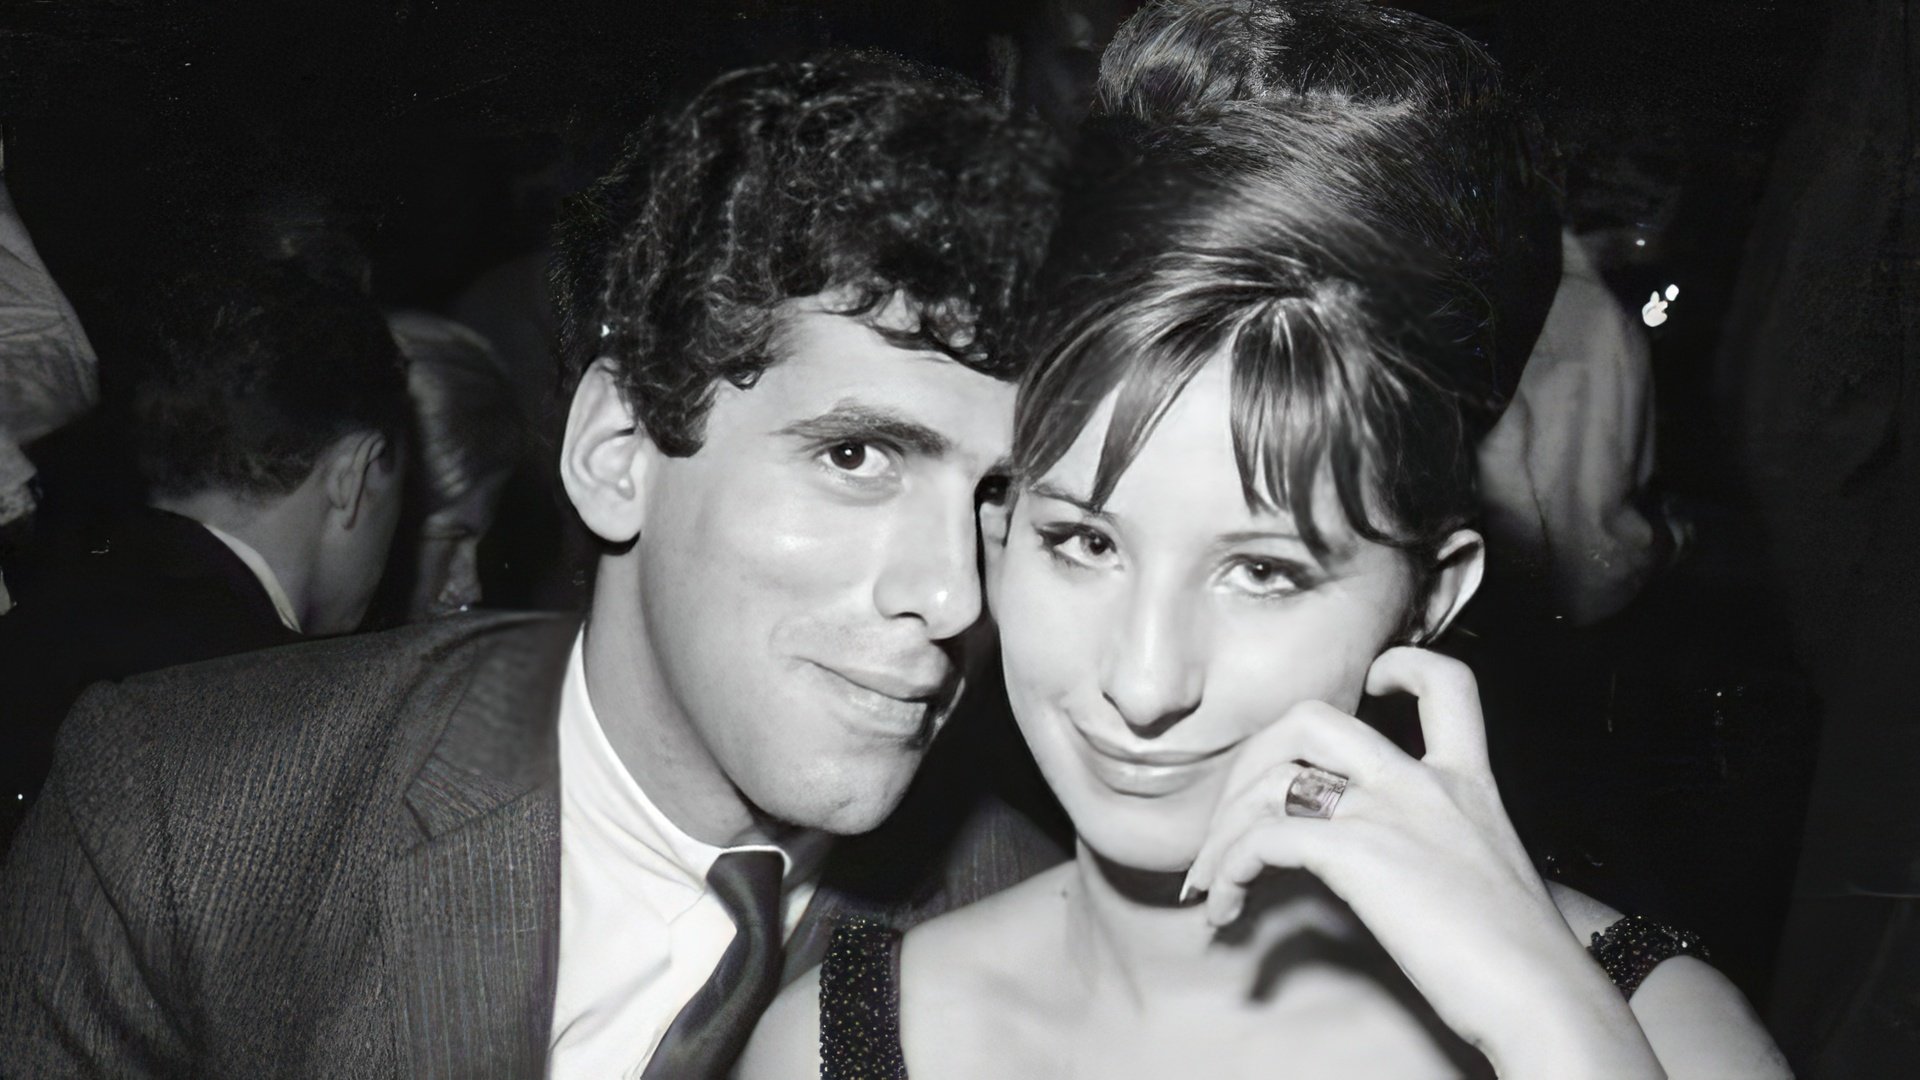 Barbra Streisand’s first husband ‒ Elliott Gould